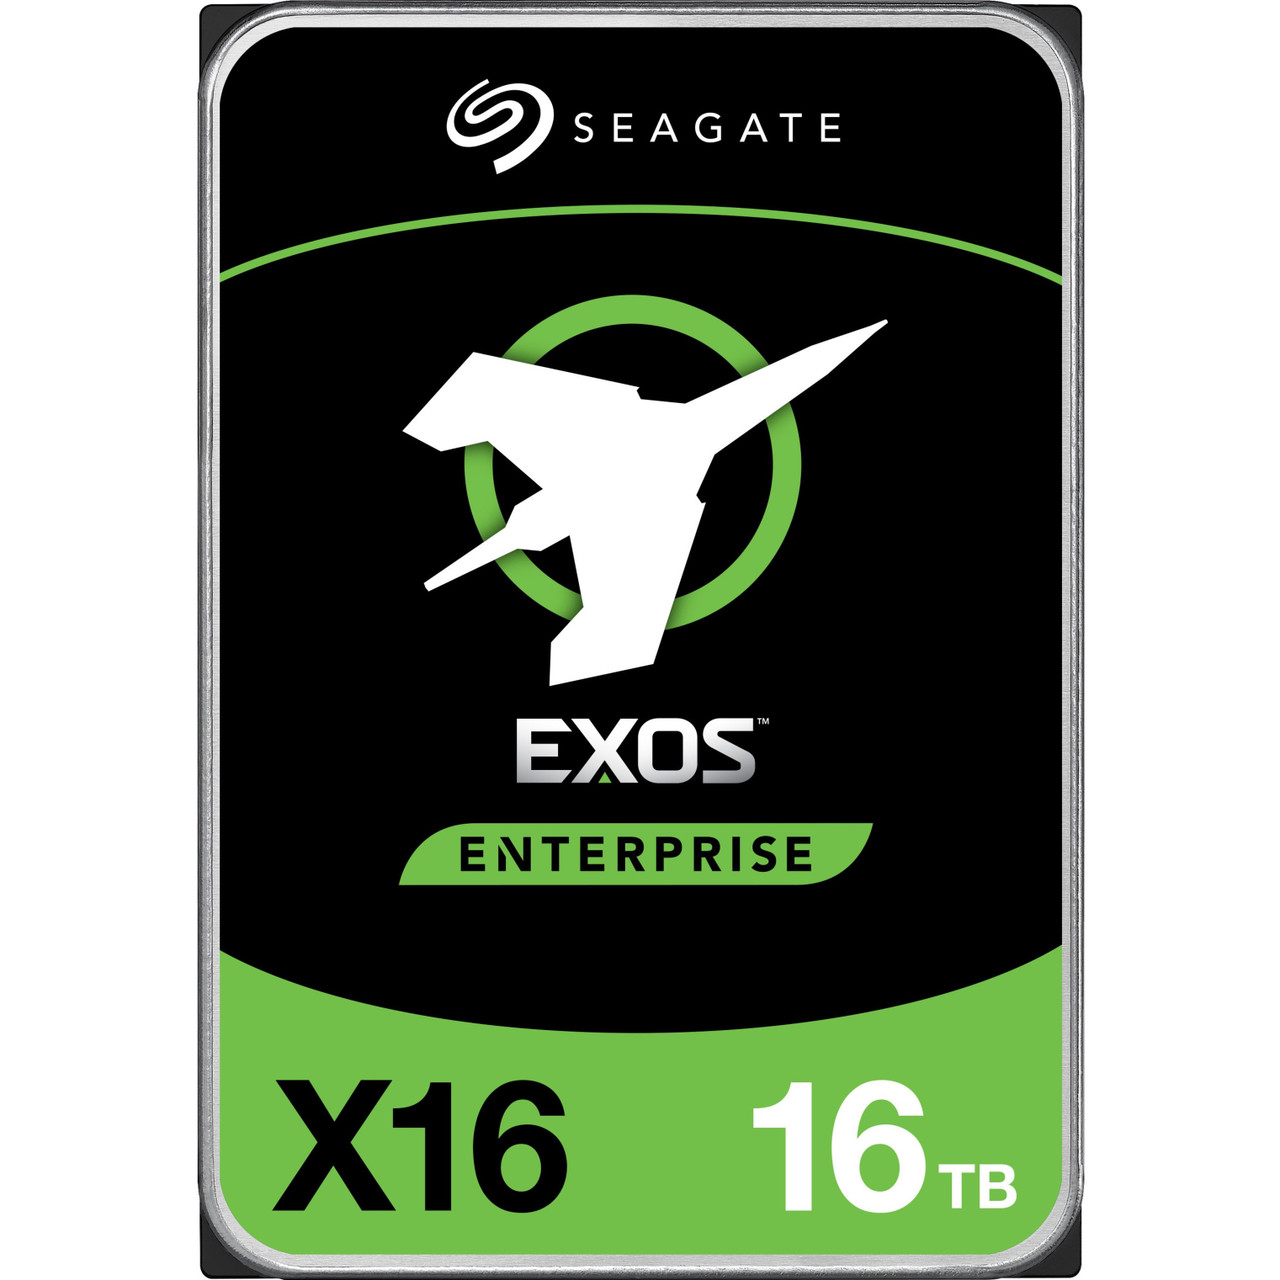 Seagate Exos X16 ST16000NM009G 16 TB Hard Drive - Internal - SAS (12Gb/s SAS)